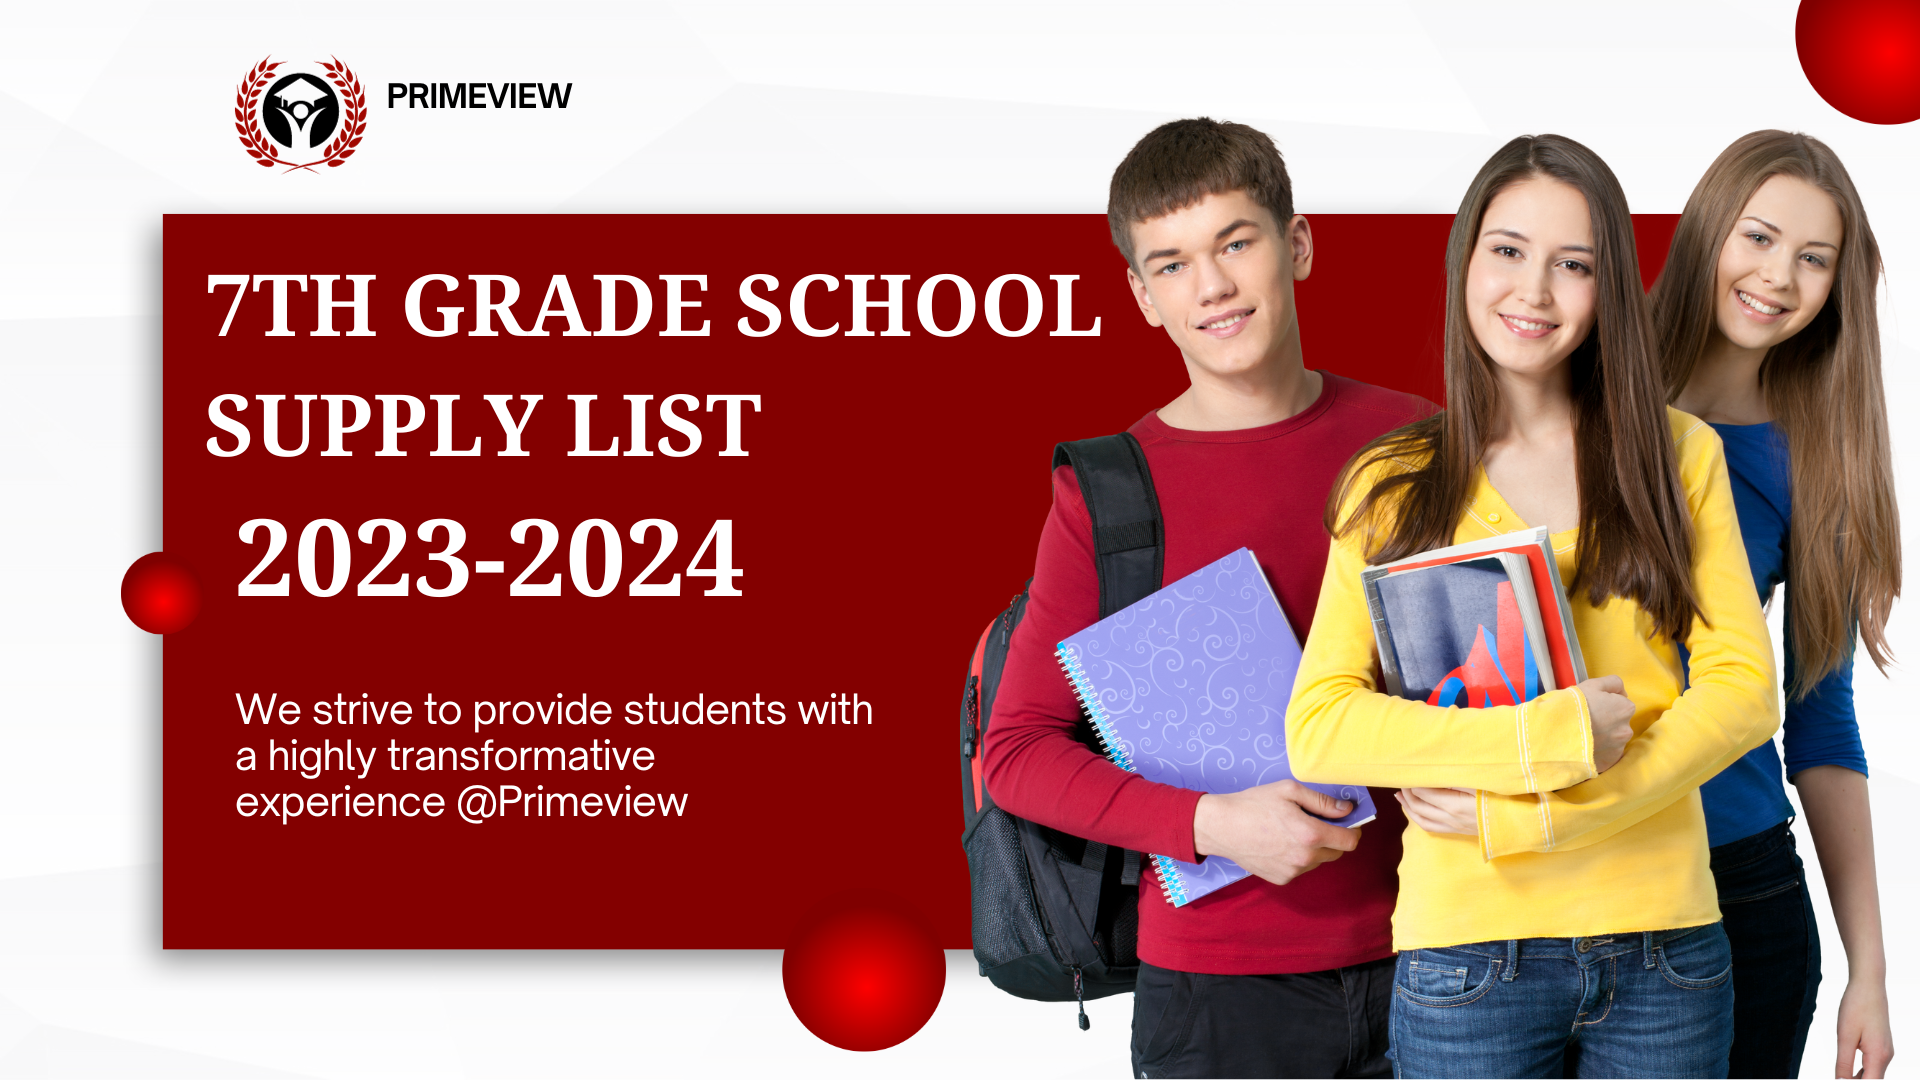 7th grade school supply list 2023-2024